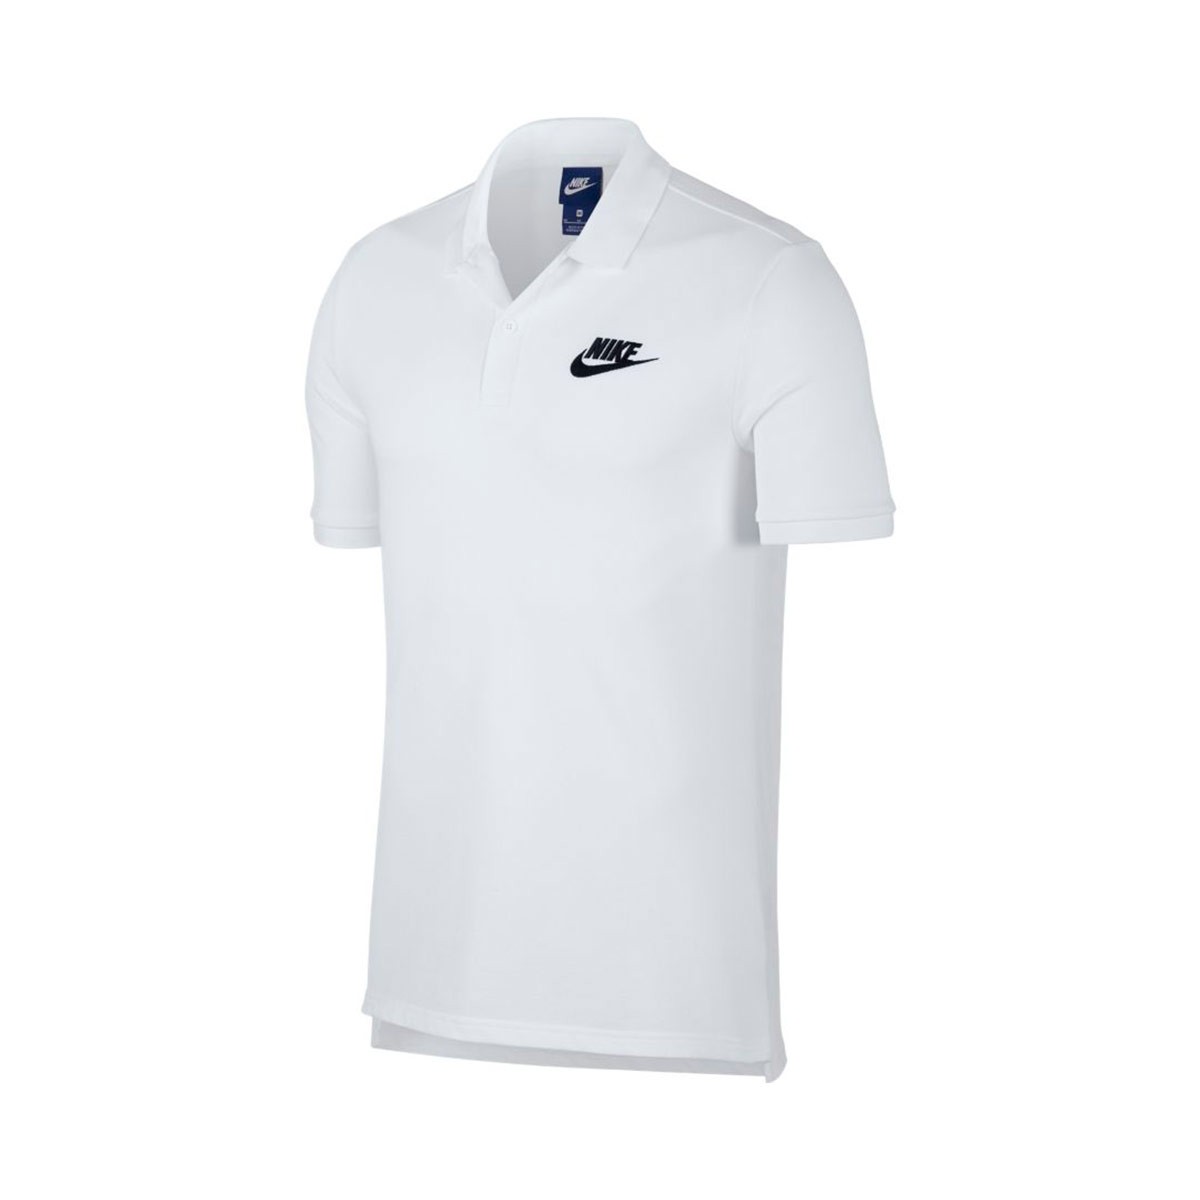 Polo shirt Nike Sportswear 2019 White-Black - Football store Fútbol Emotion